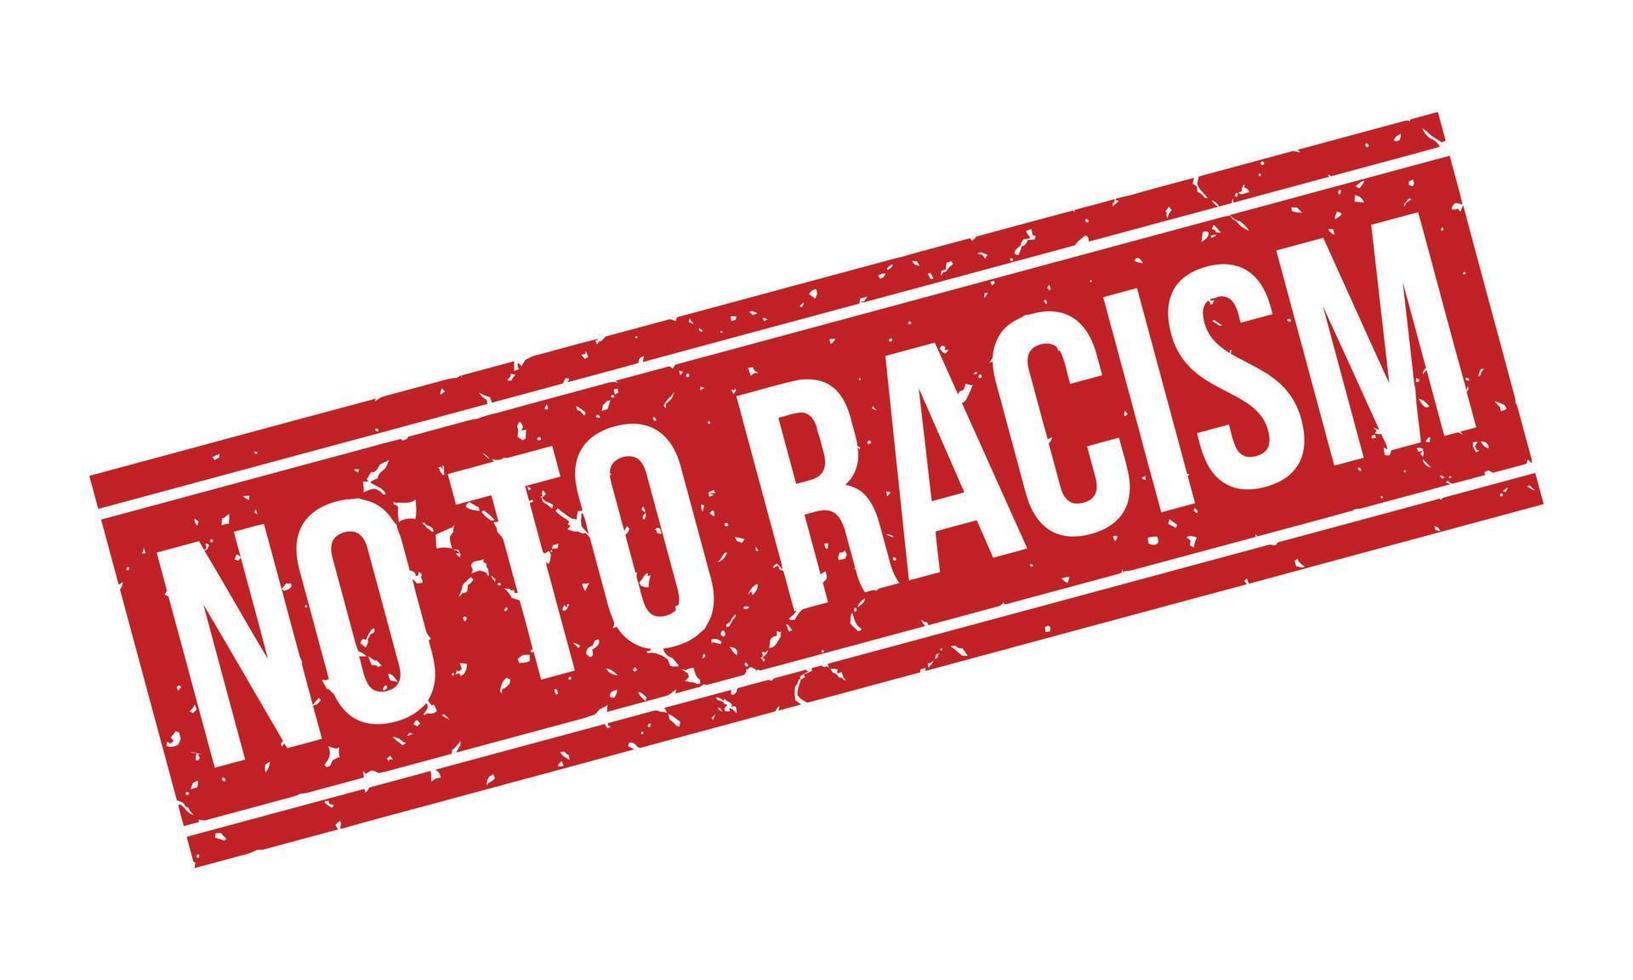 No to Racism Rubber Grunge Stamp Seal Vector Illustration